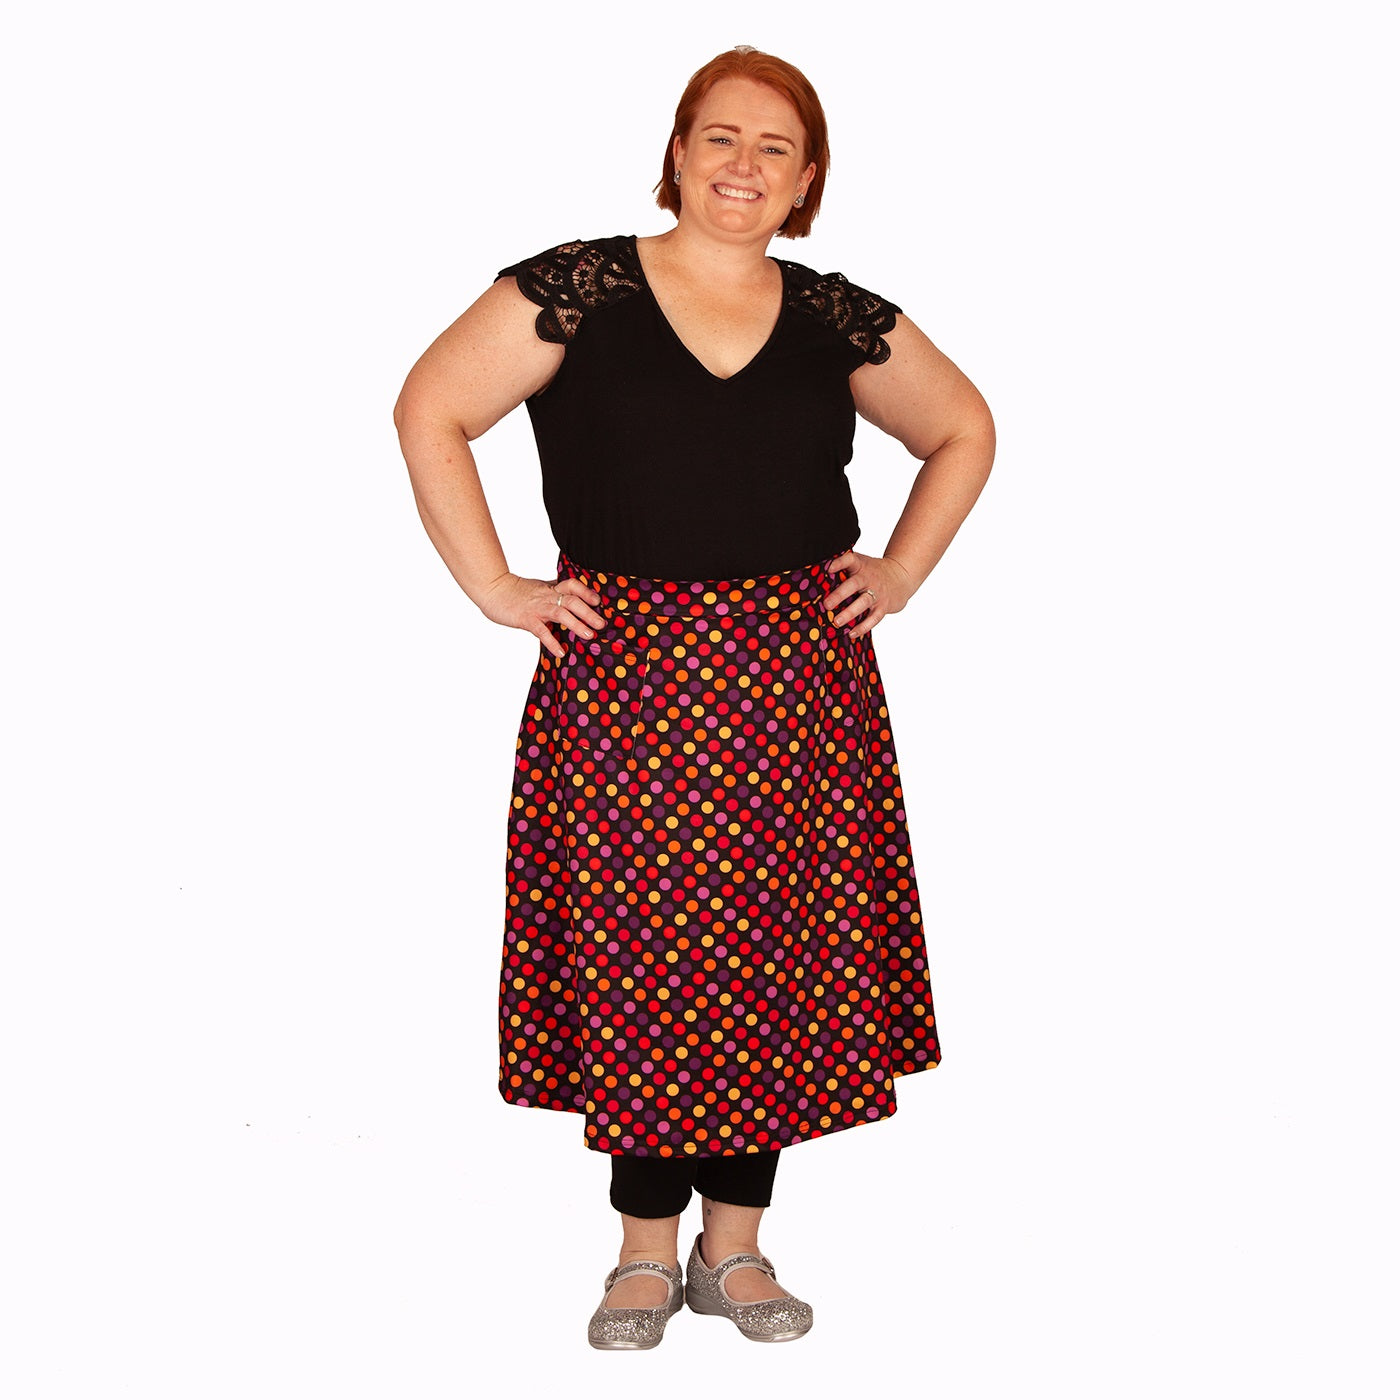 Pastel Confetti Original Skirt by RainbowsAndFairies.com (Polka Dots - Stripes - Spots - Skirt With Pockets - Aline Skirt - Vintage Inspired - Rock & Roll) - SKU: CL_OSKRT_CONFT_PAS - Pic 05